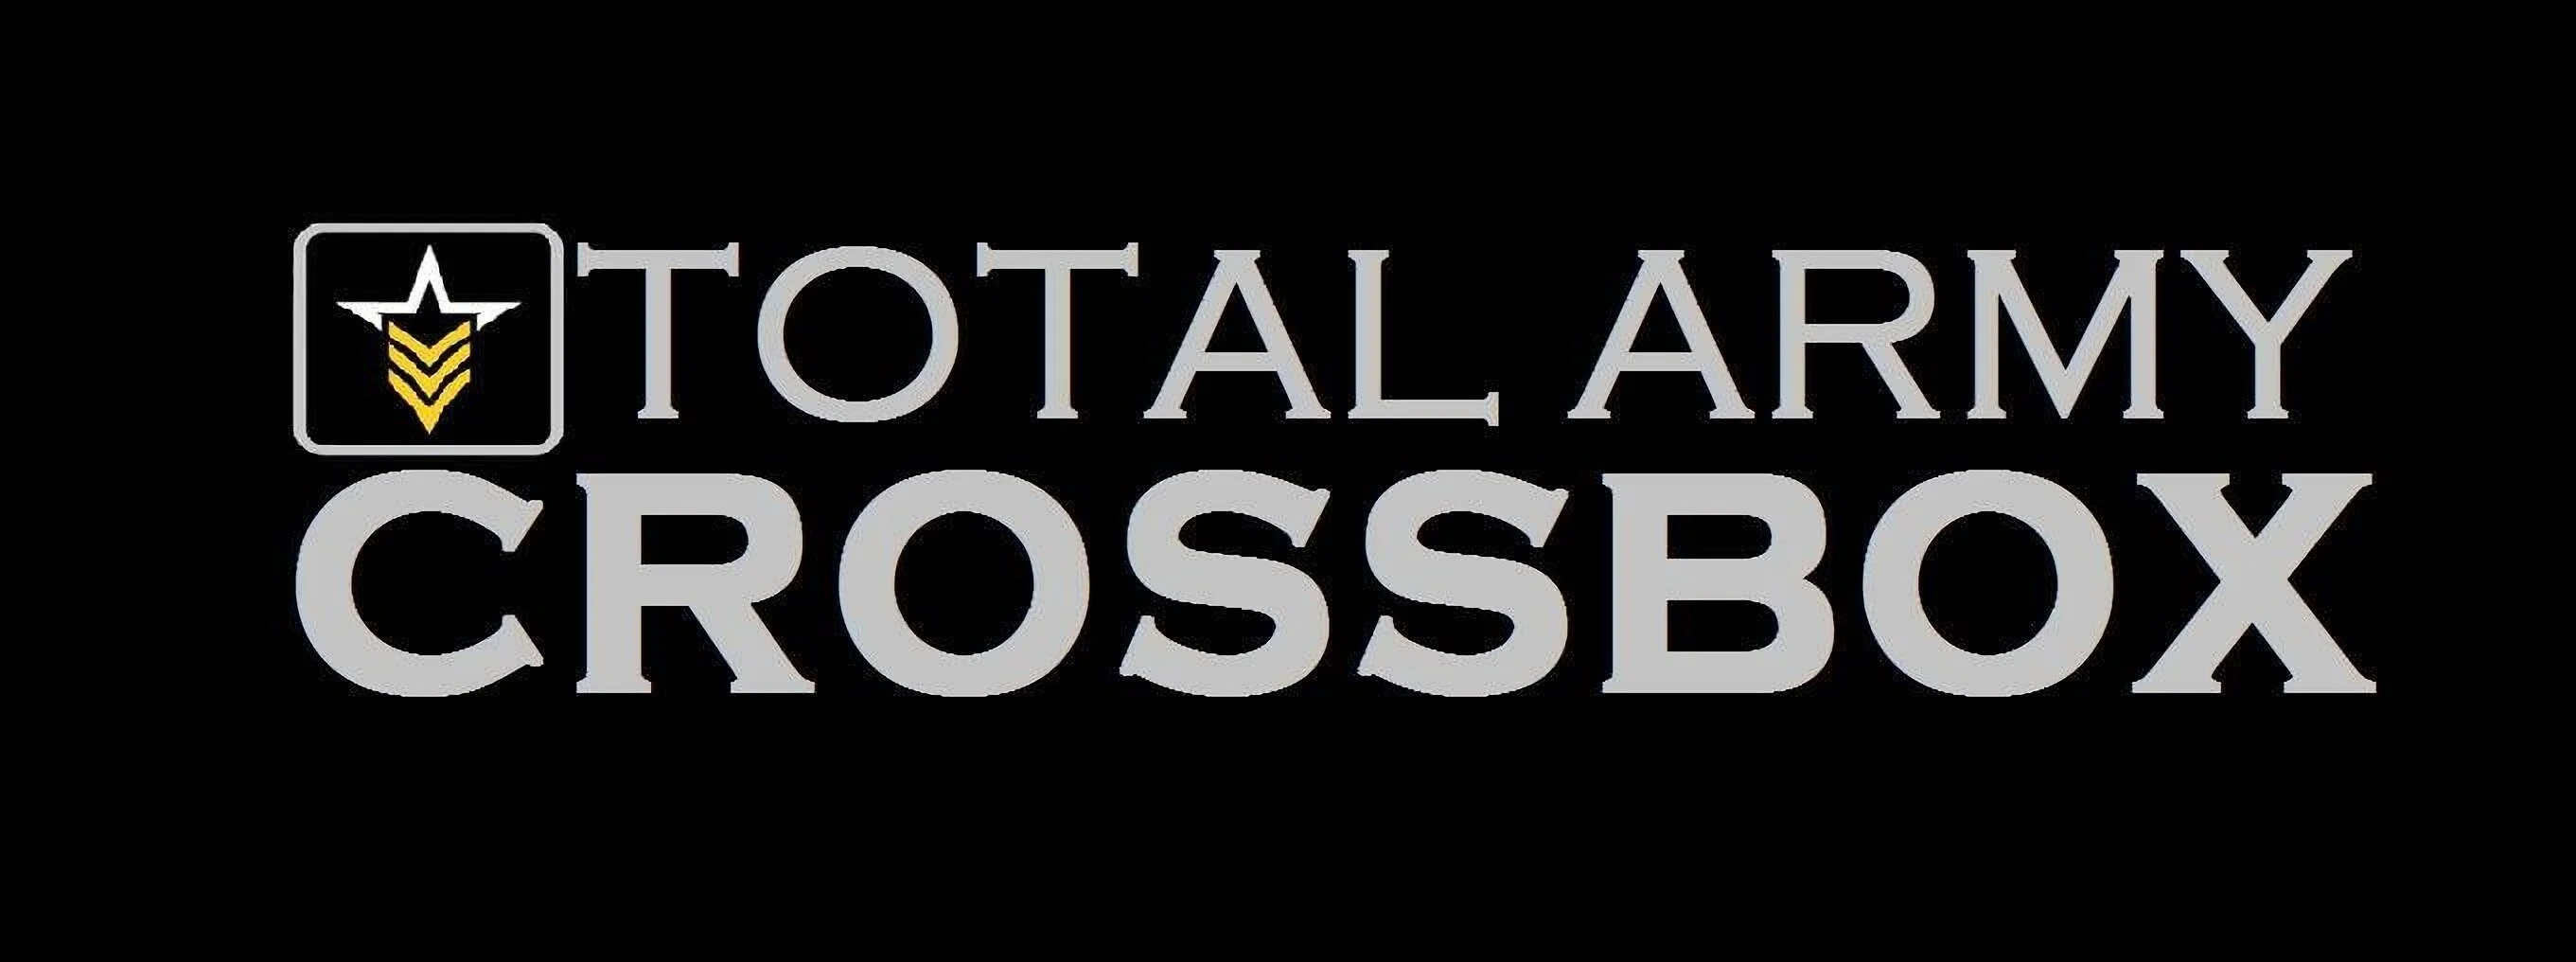 Crossfit-total-army-crossbox-crossfit-11122